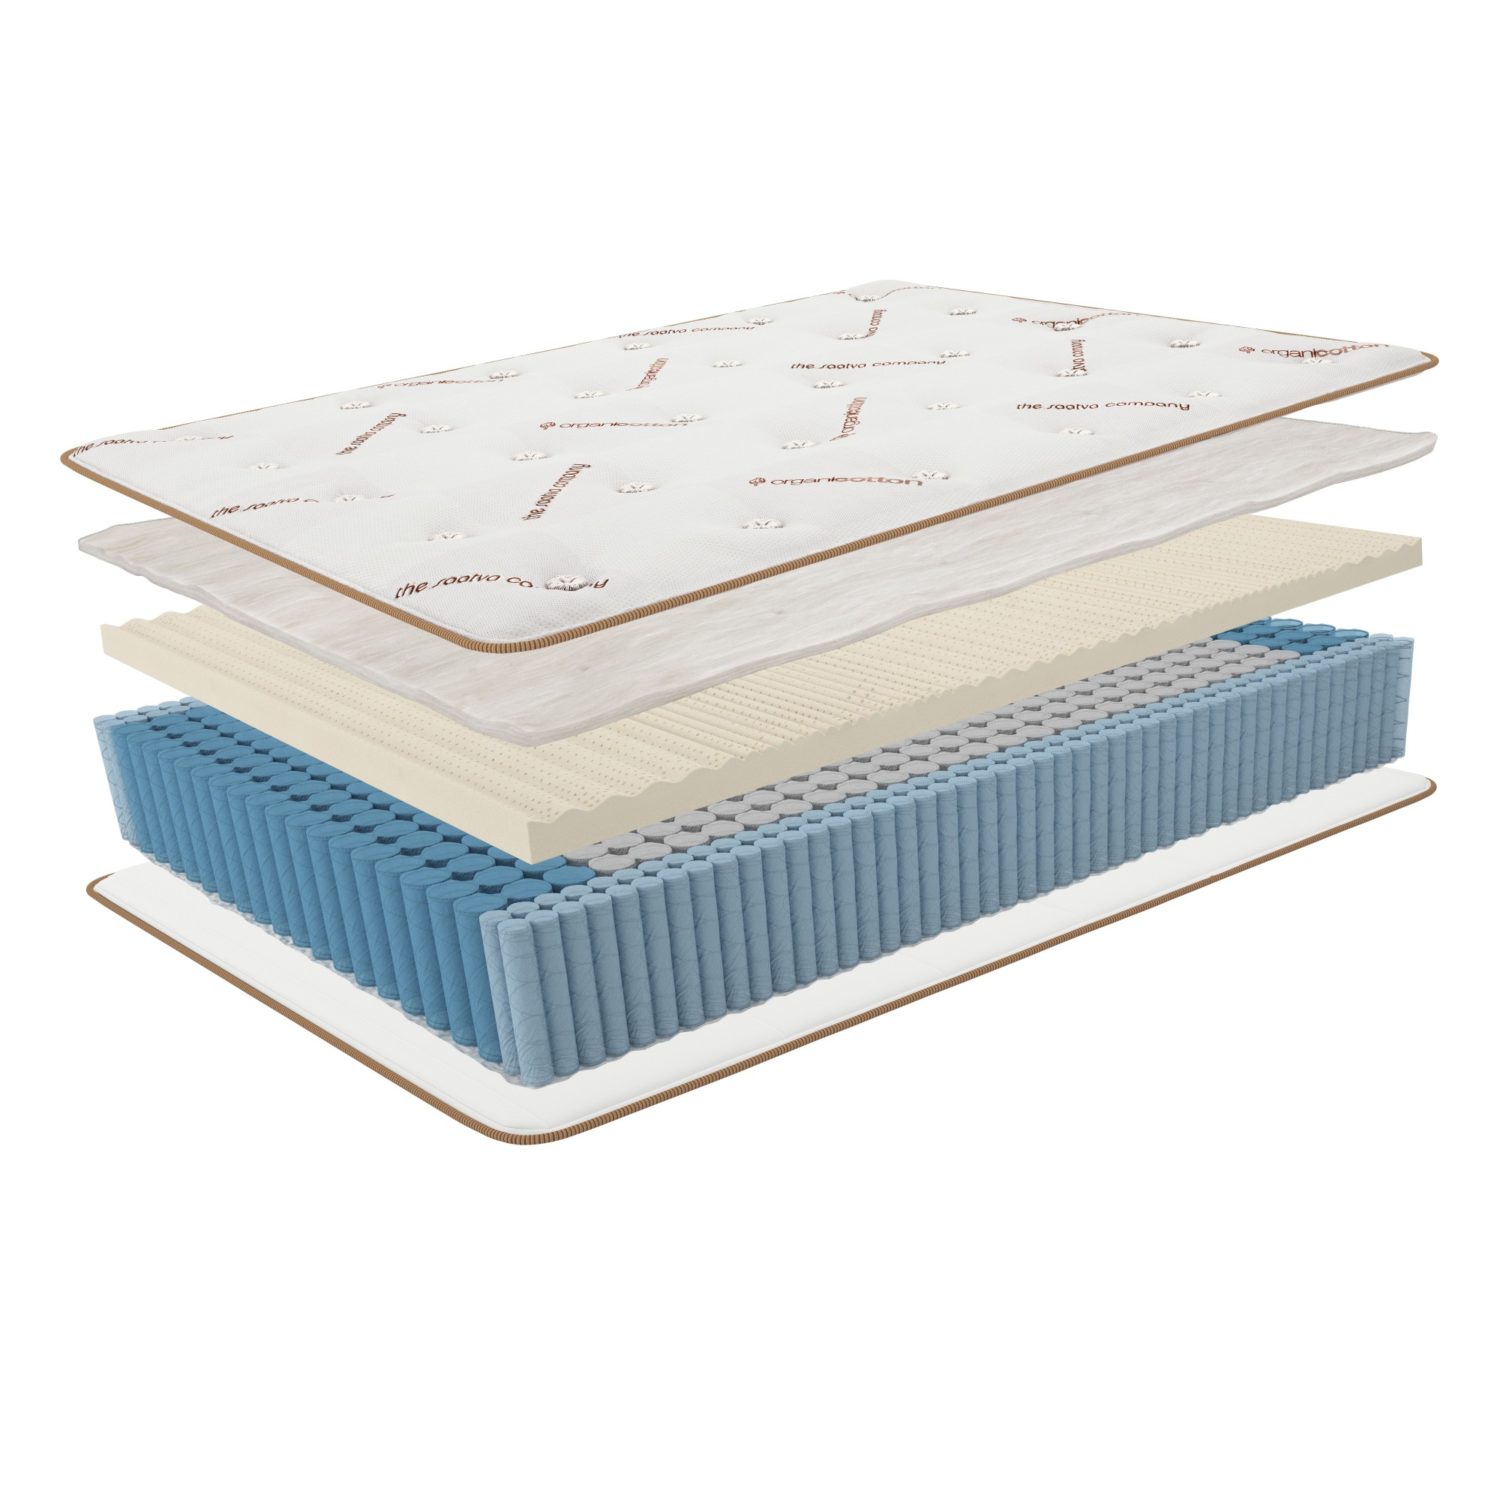 Saatva Mattresses - The best mattress for Arthritis Patients